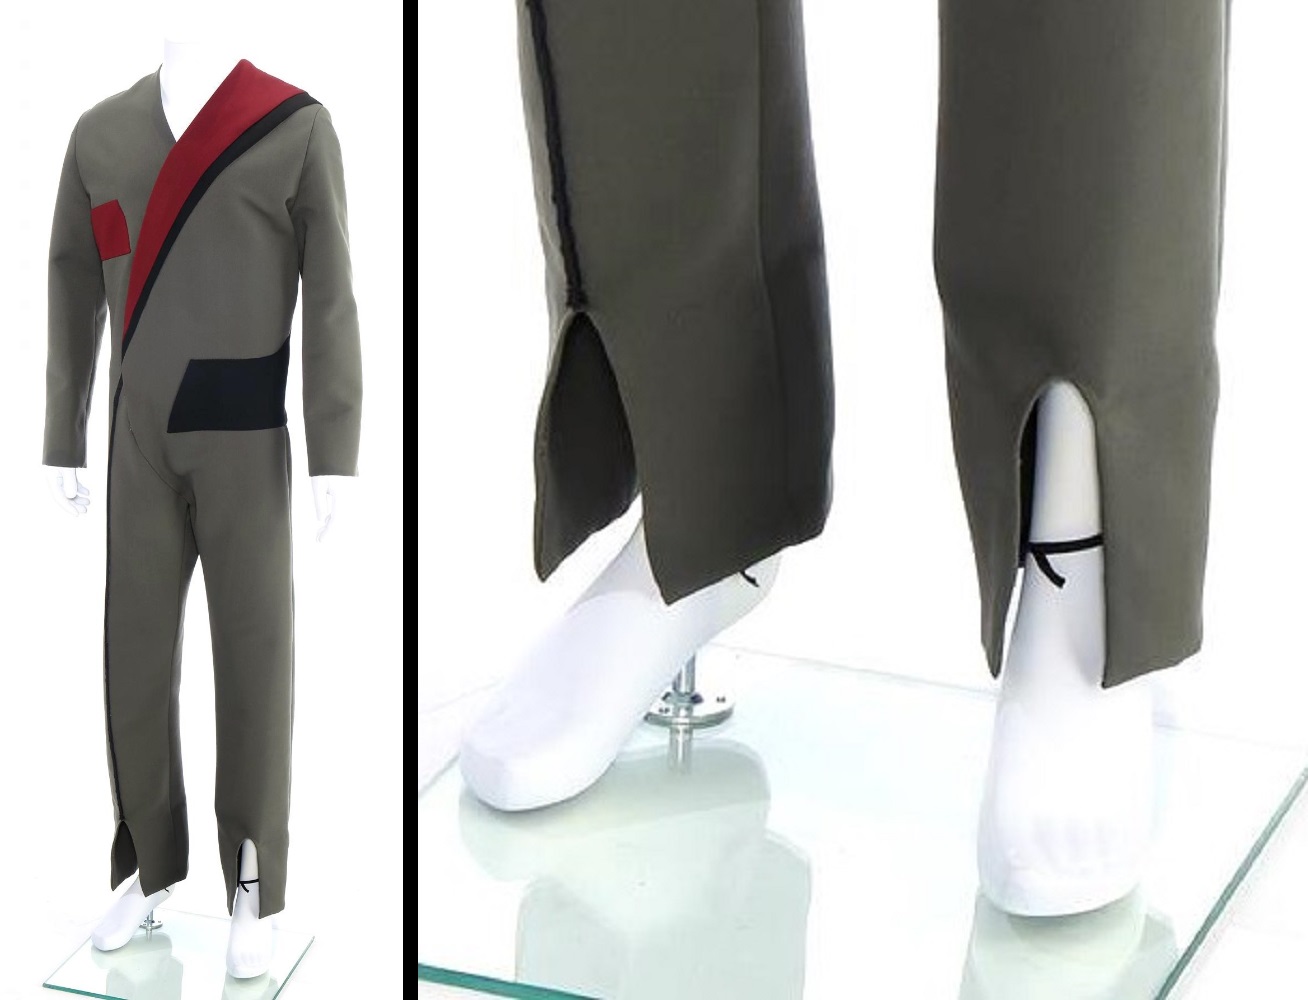 Star Trek TOS uniforms